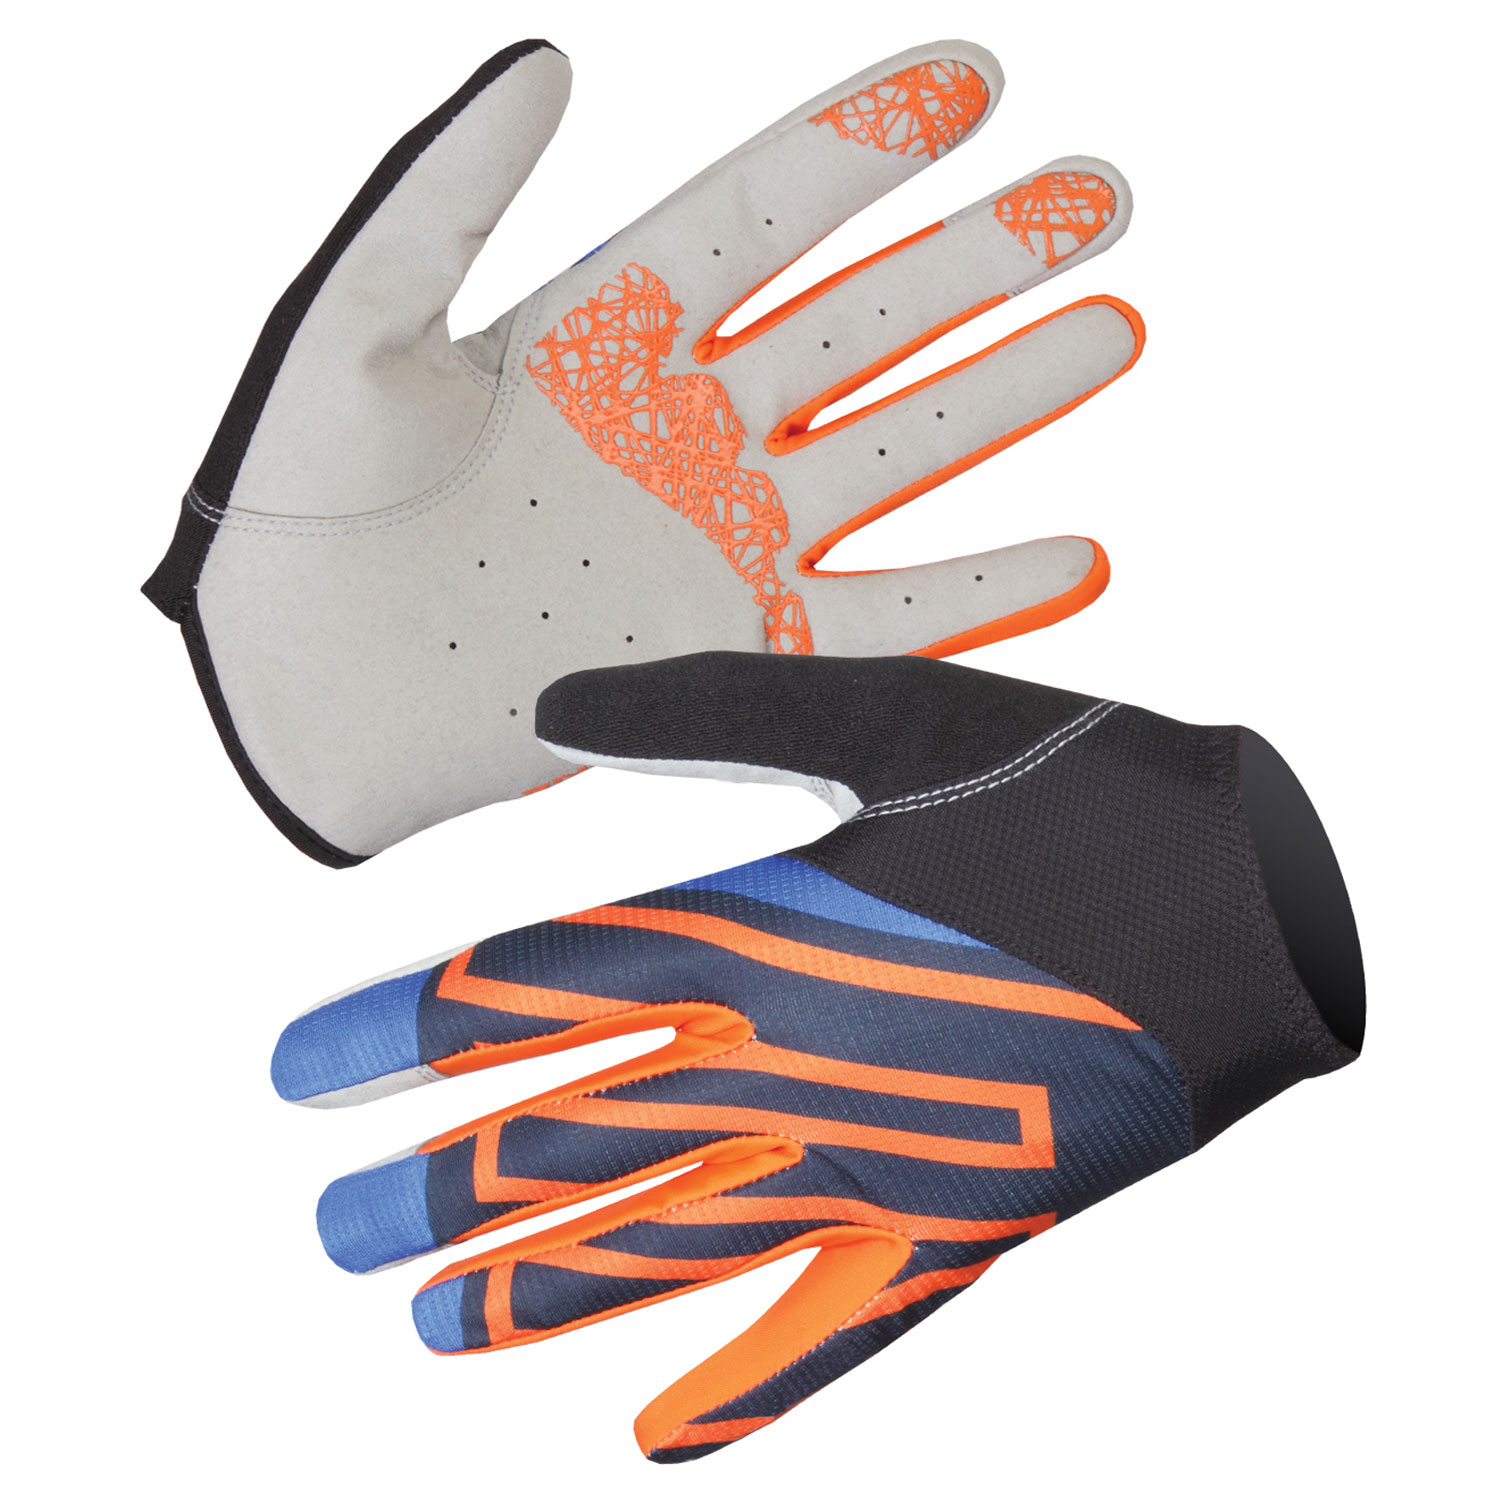 Anti-slip flexible microfiber palm durable cycling gloves